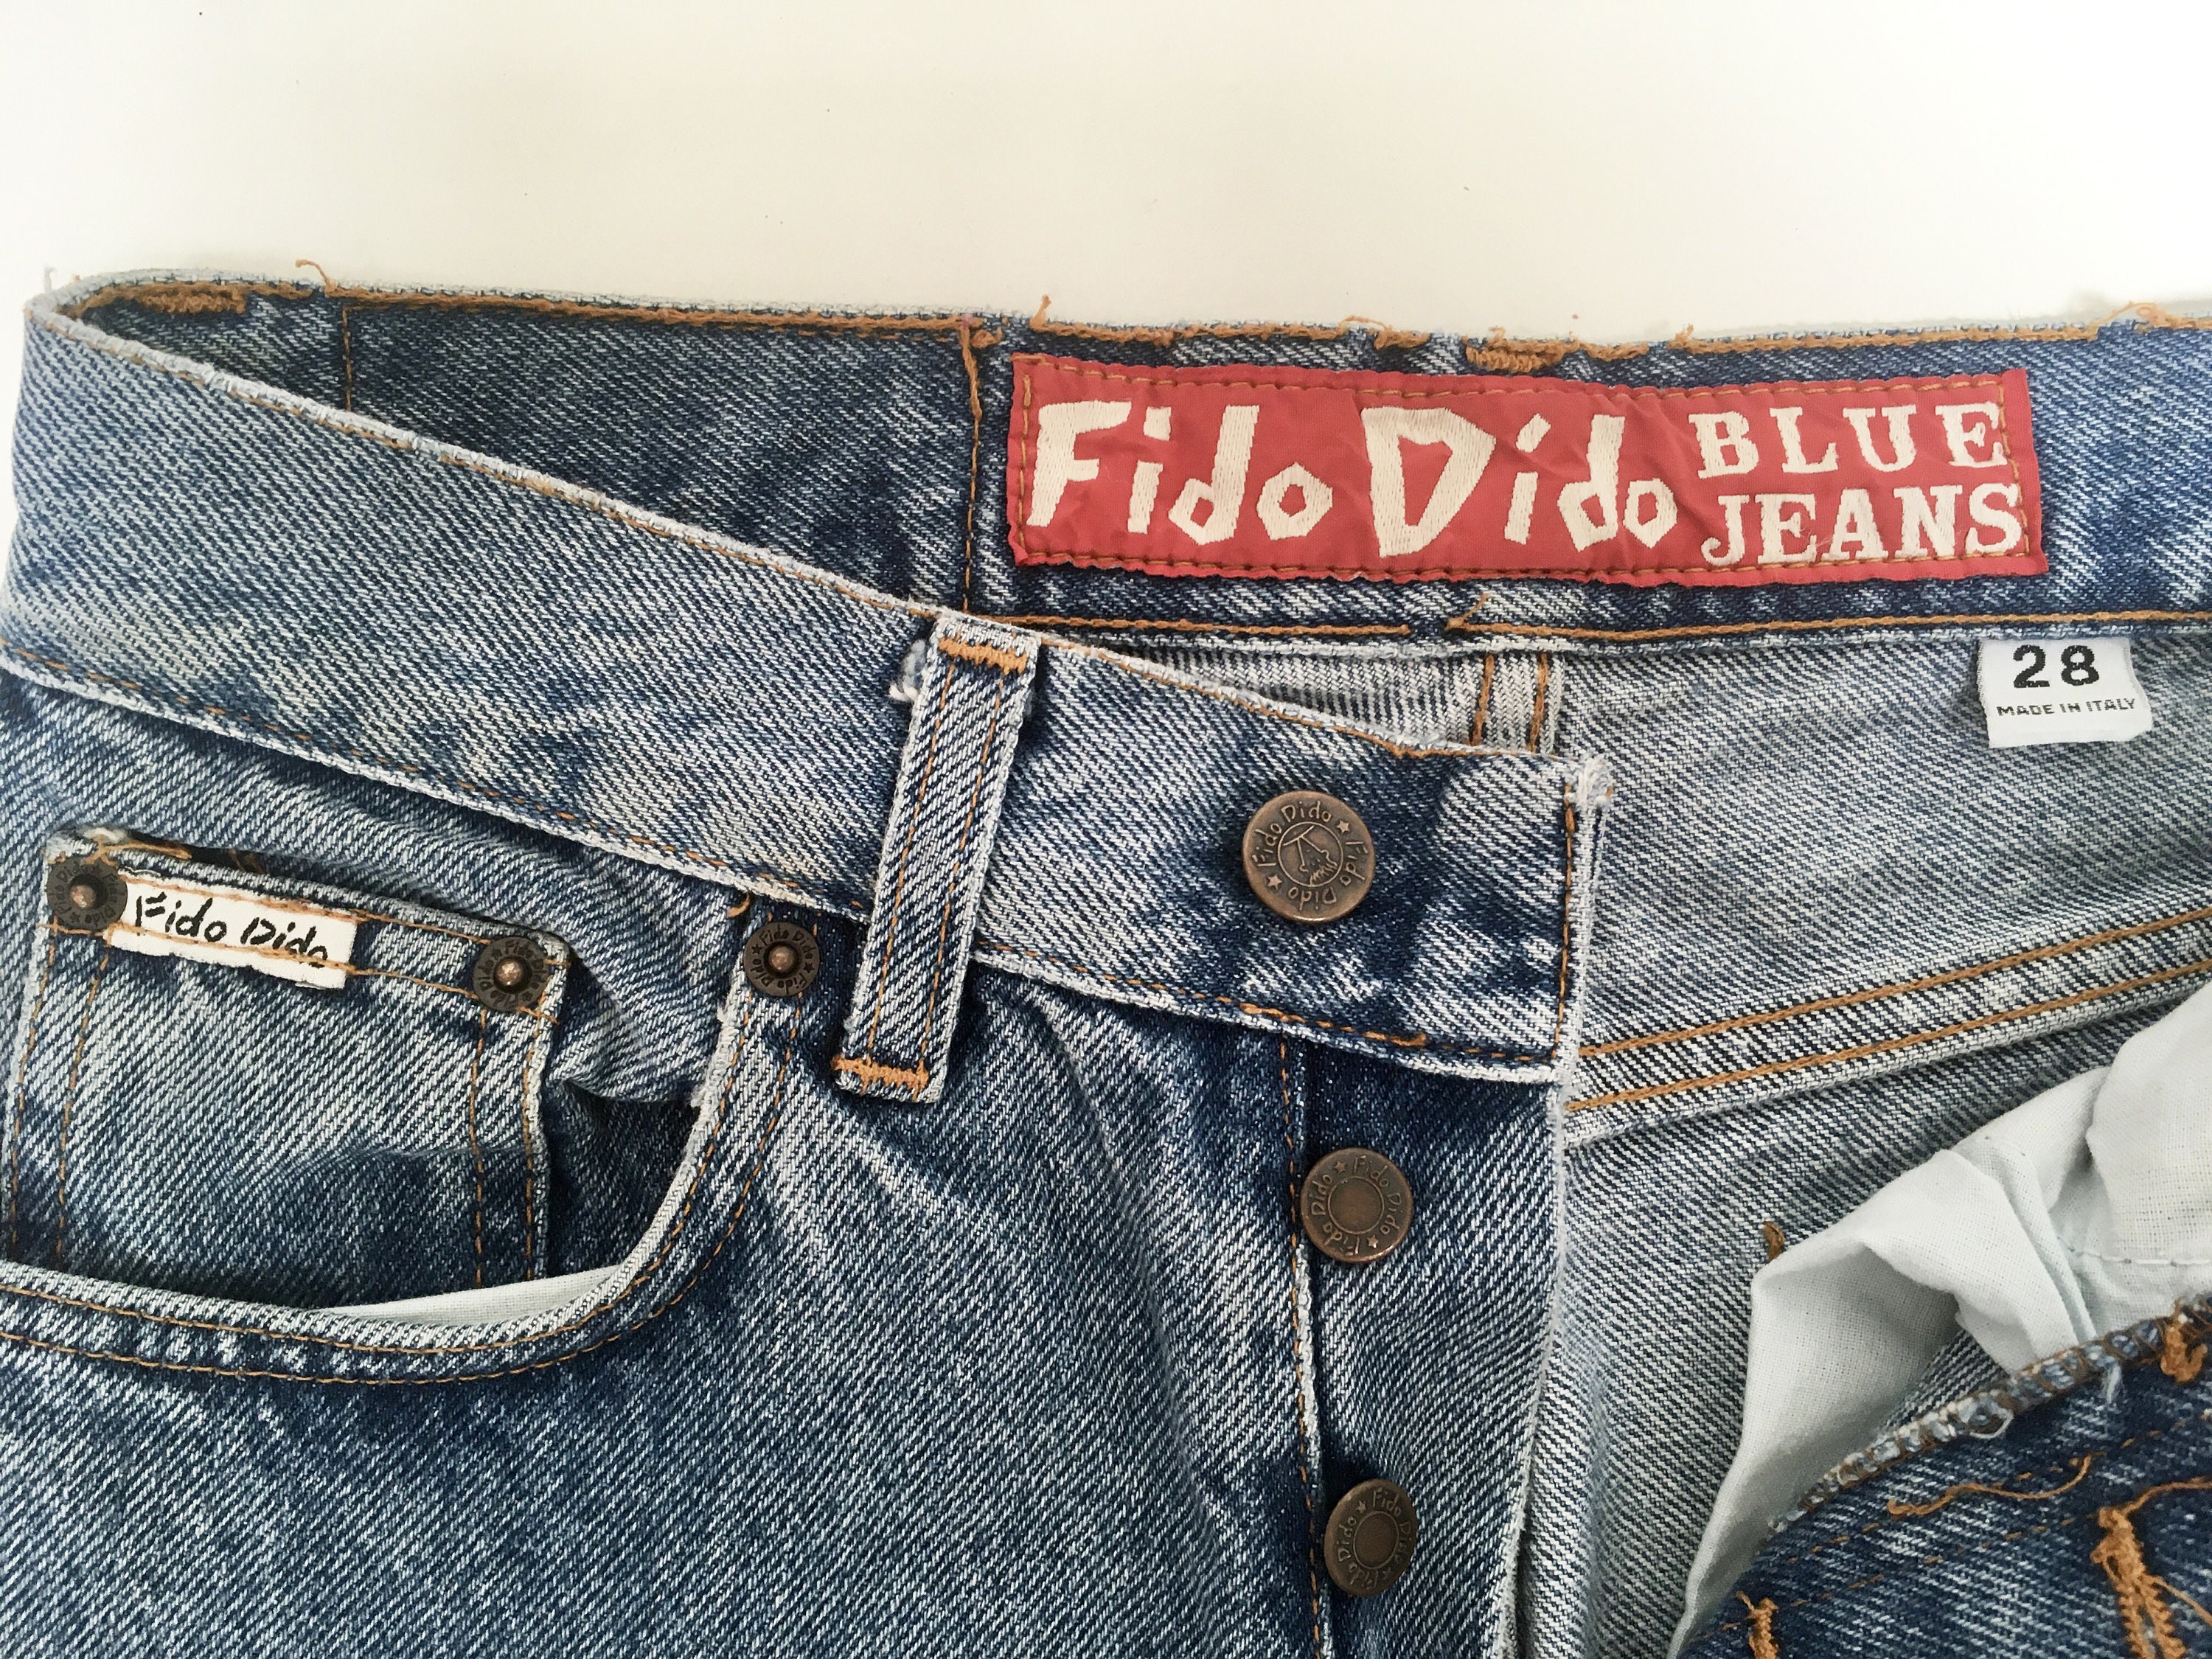 Vintage Zeldzame Originele Jean Fido Dido Blue Jeans - Etsy Nederland